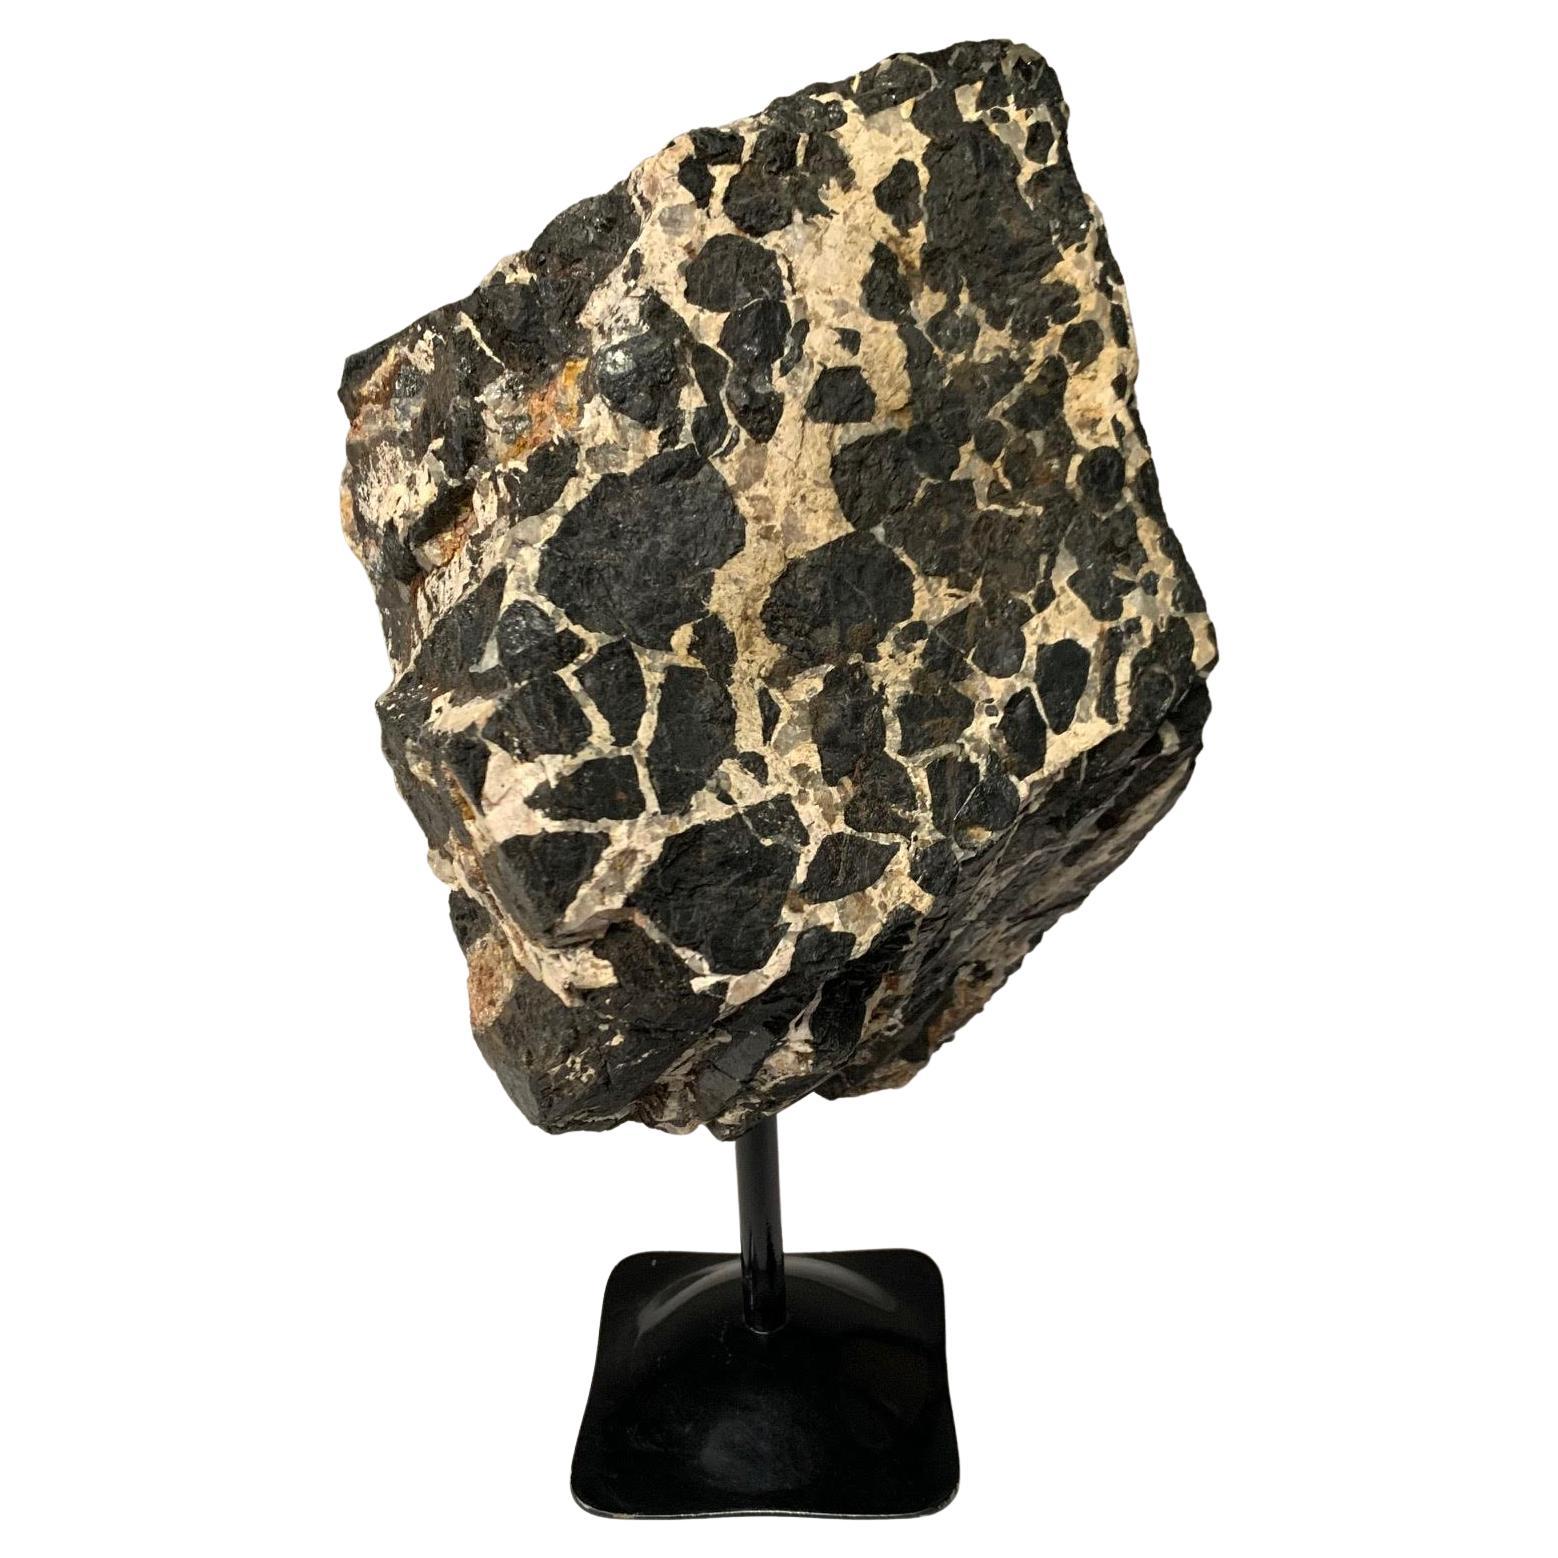 Black and Cream Tourmaline Stone Sculpture on Stand, Brazil, Prehistoric